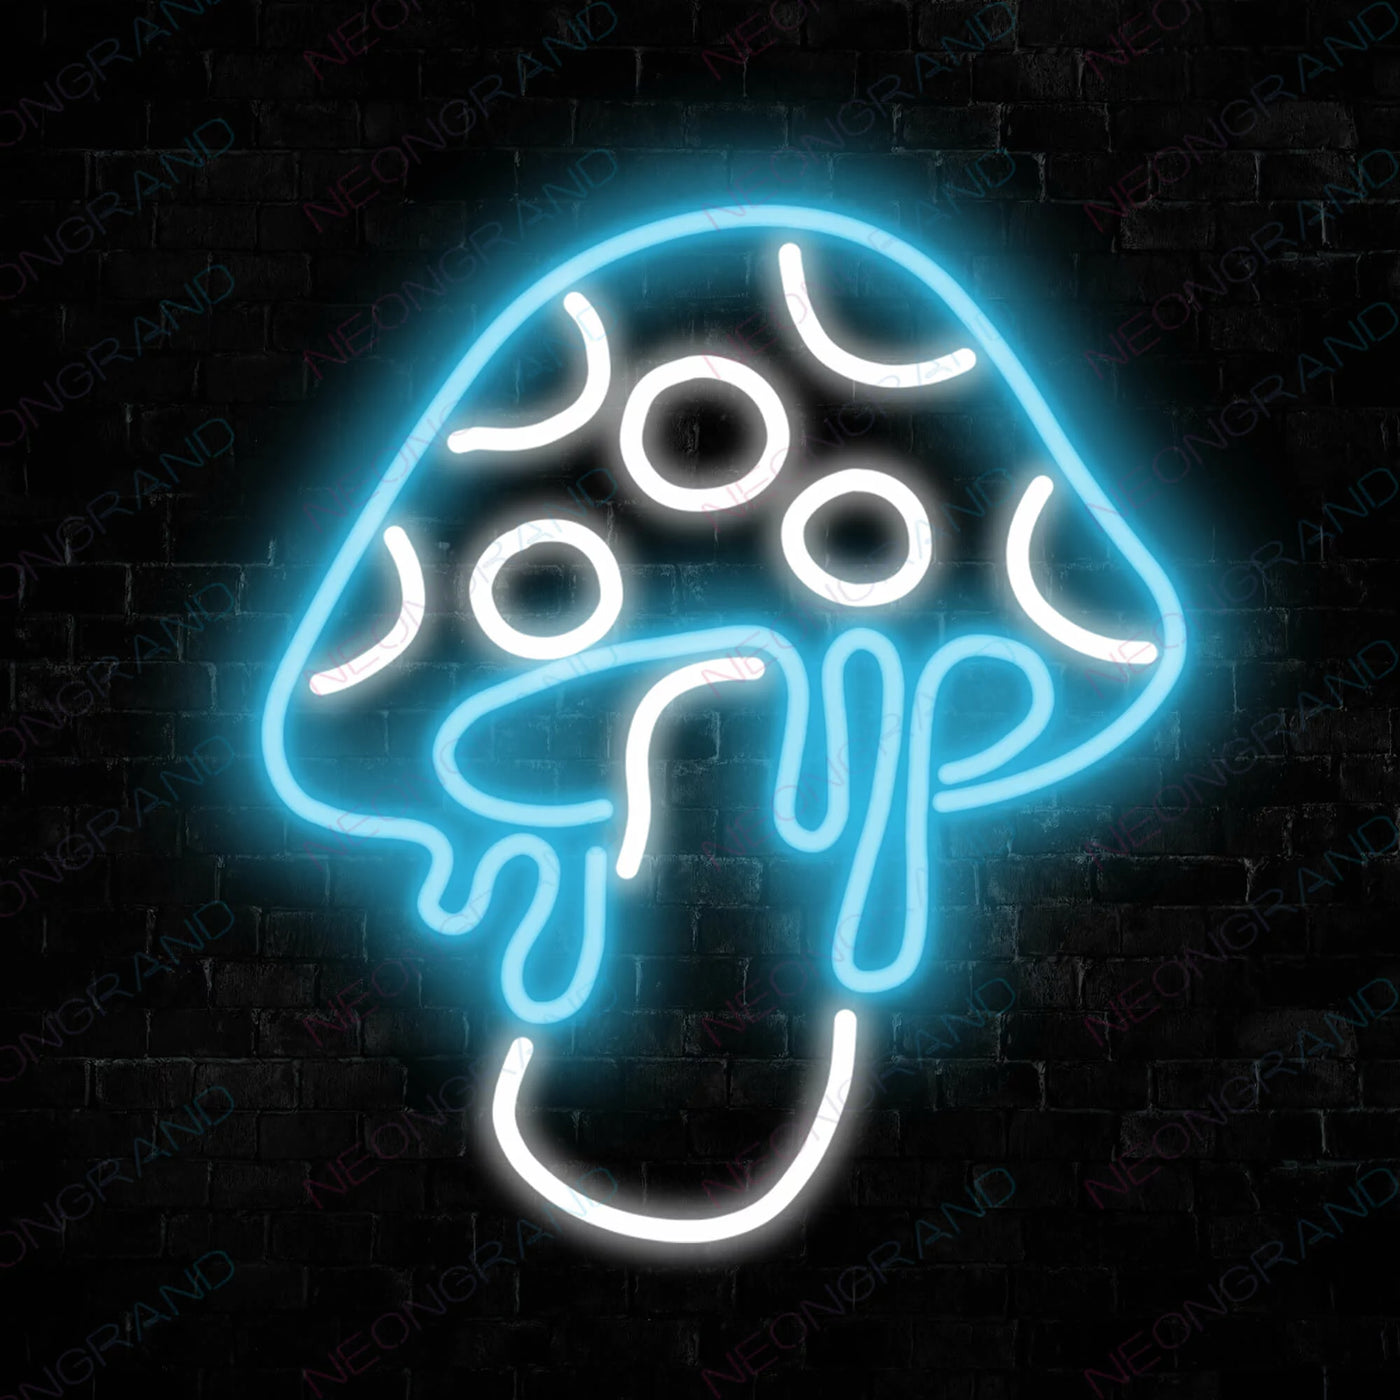 Funny Mushroom Neon Sign Led Light SkyBlue